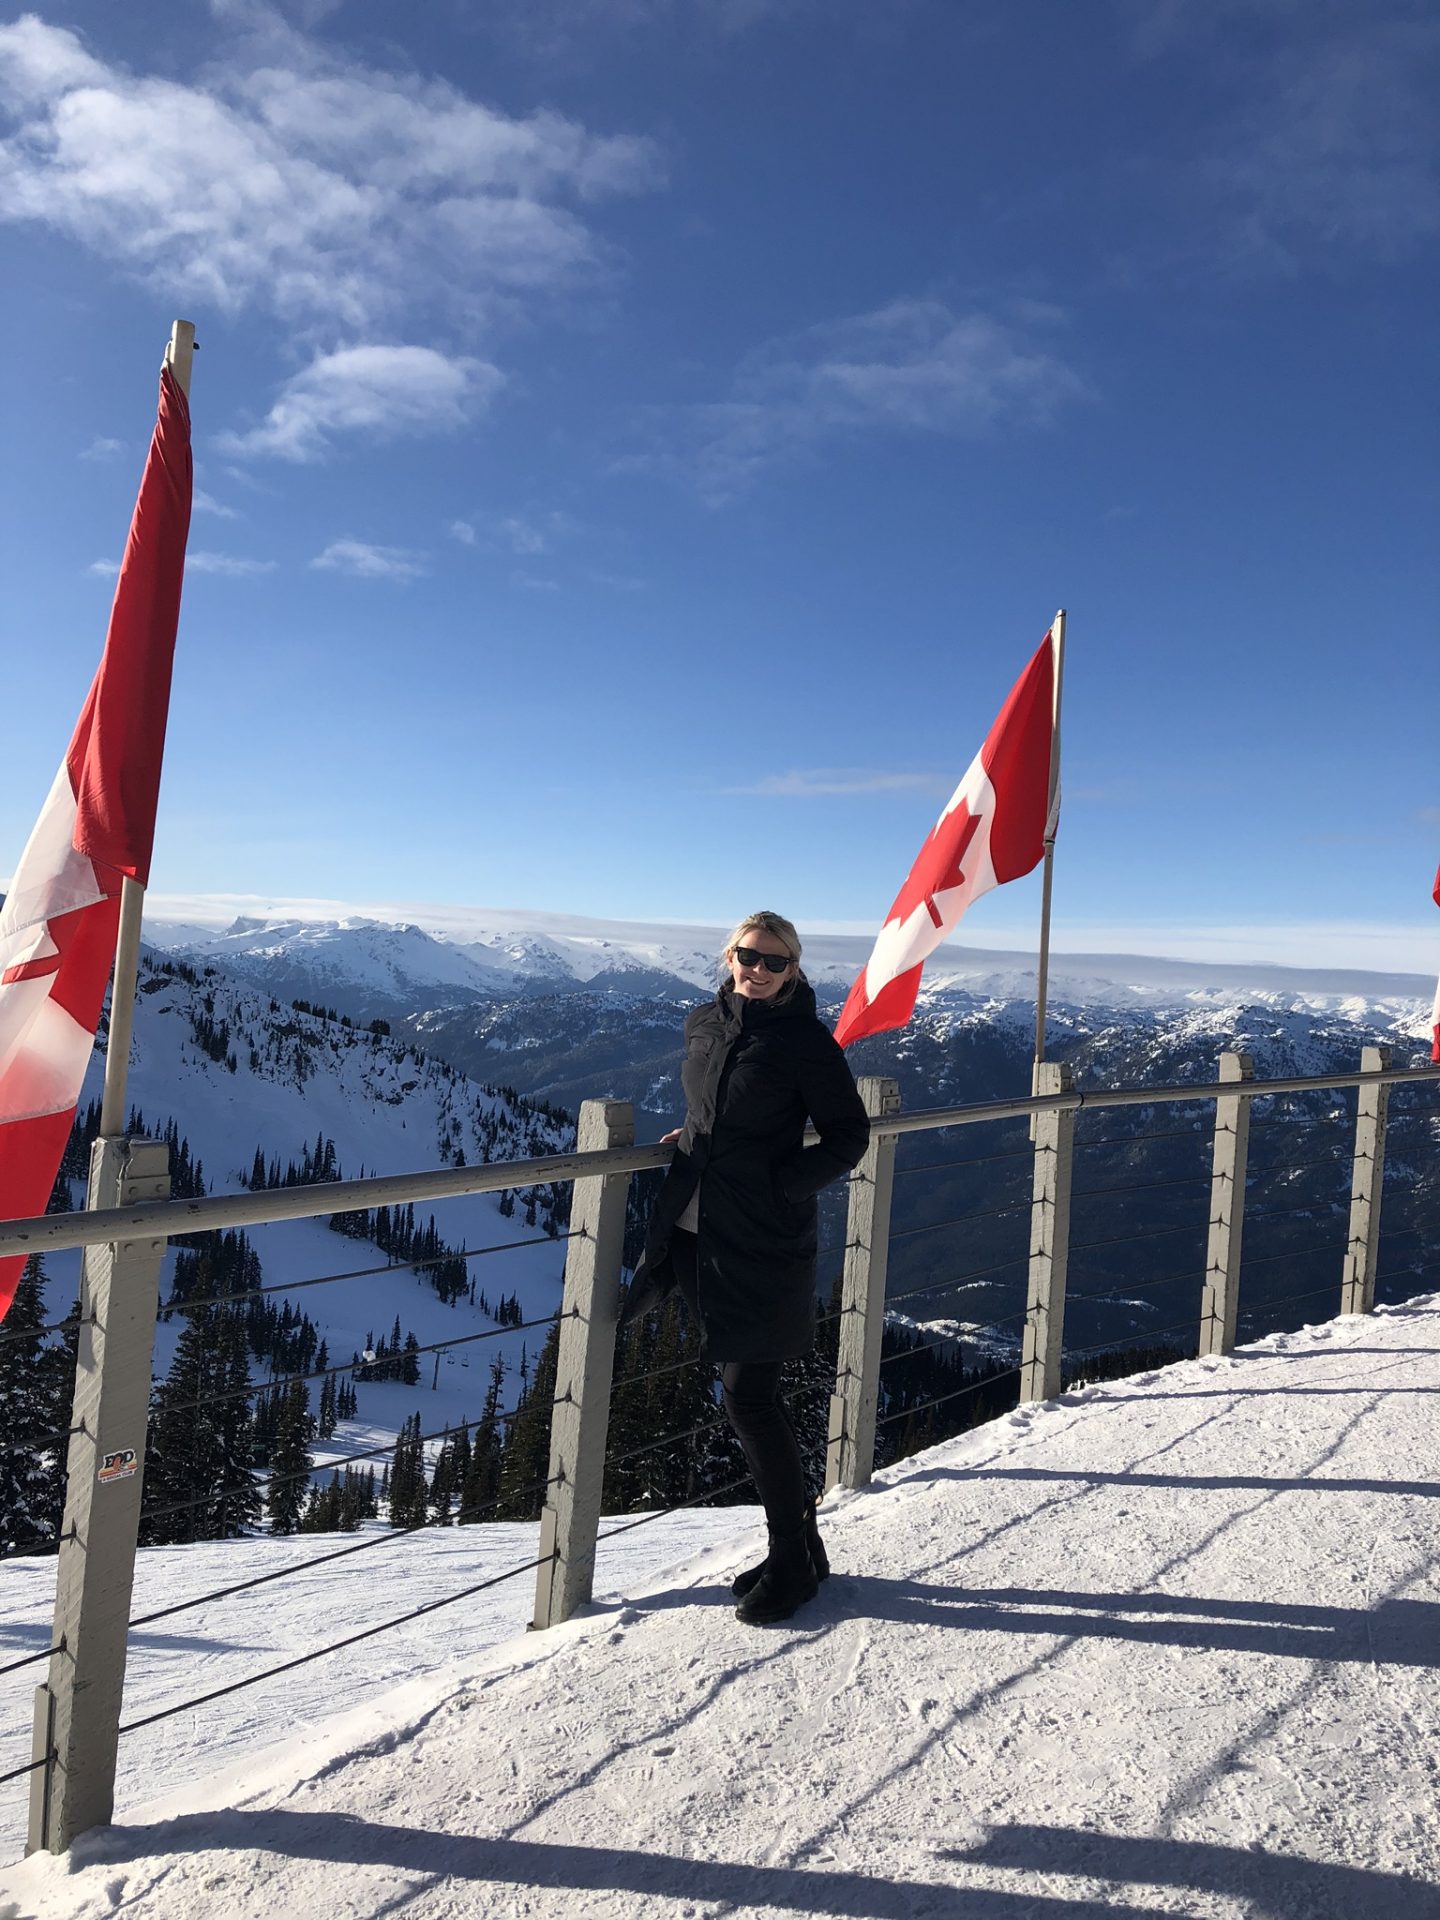 Laura at the peak of Whistler mountain